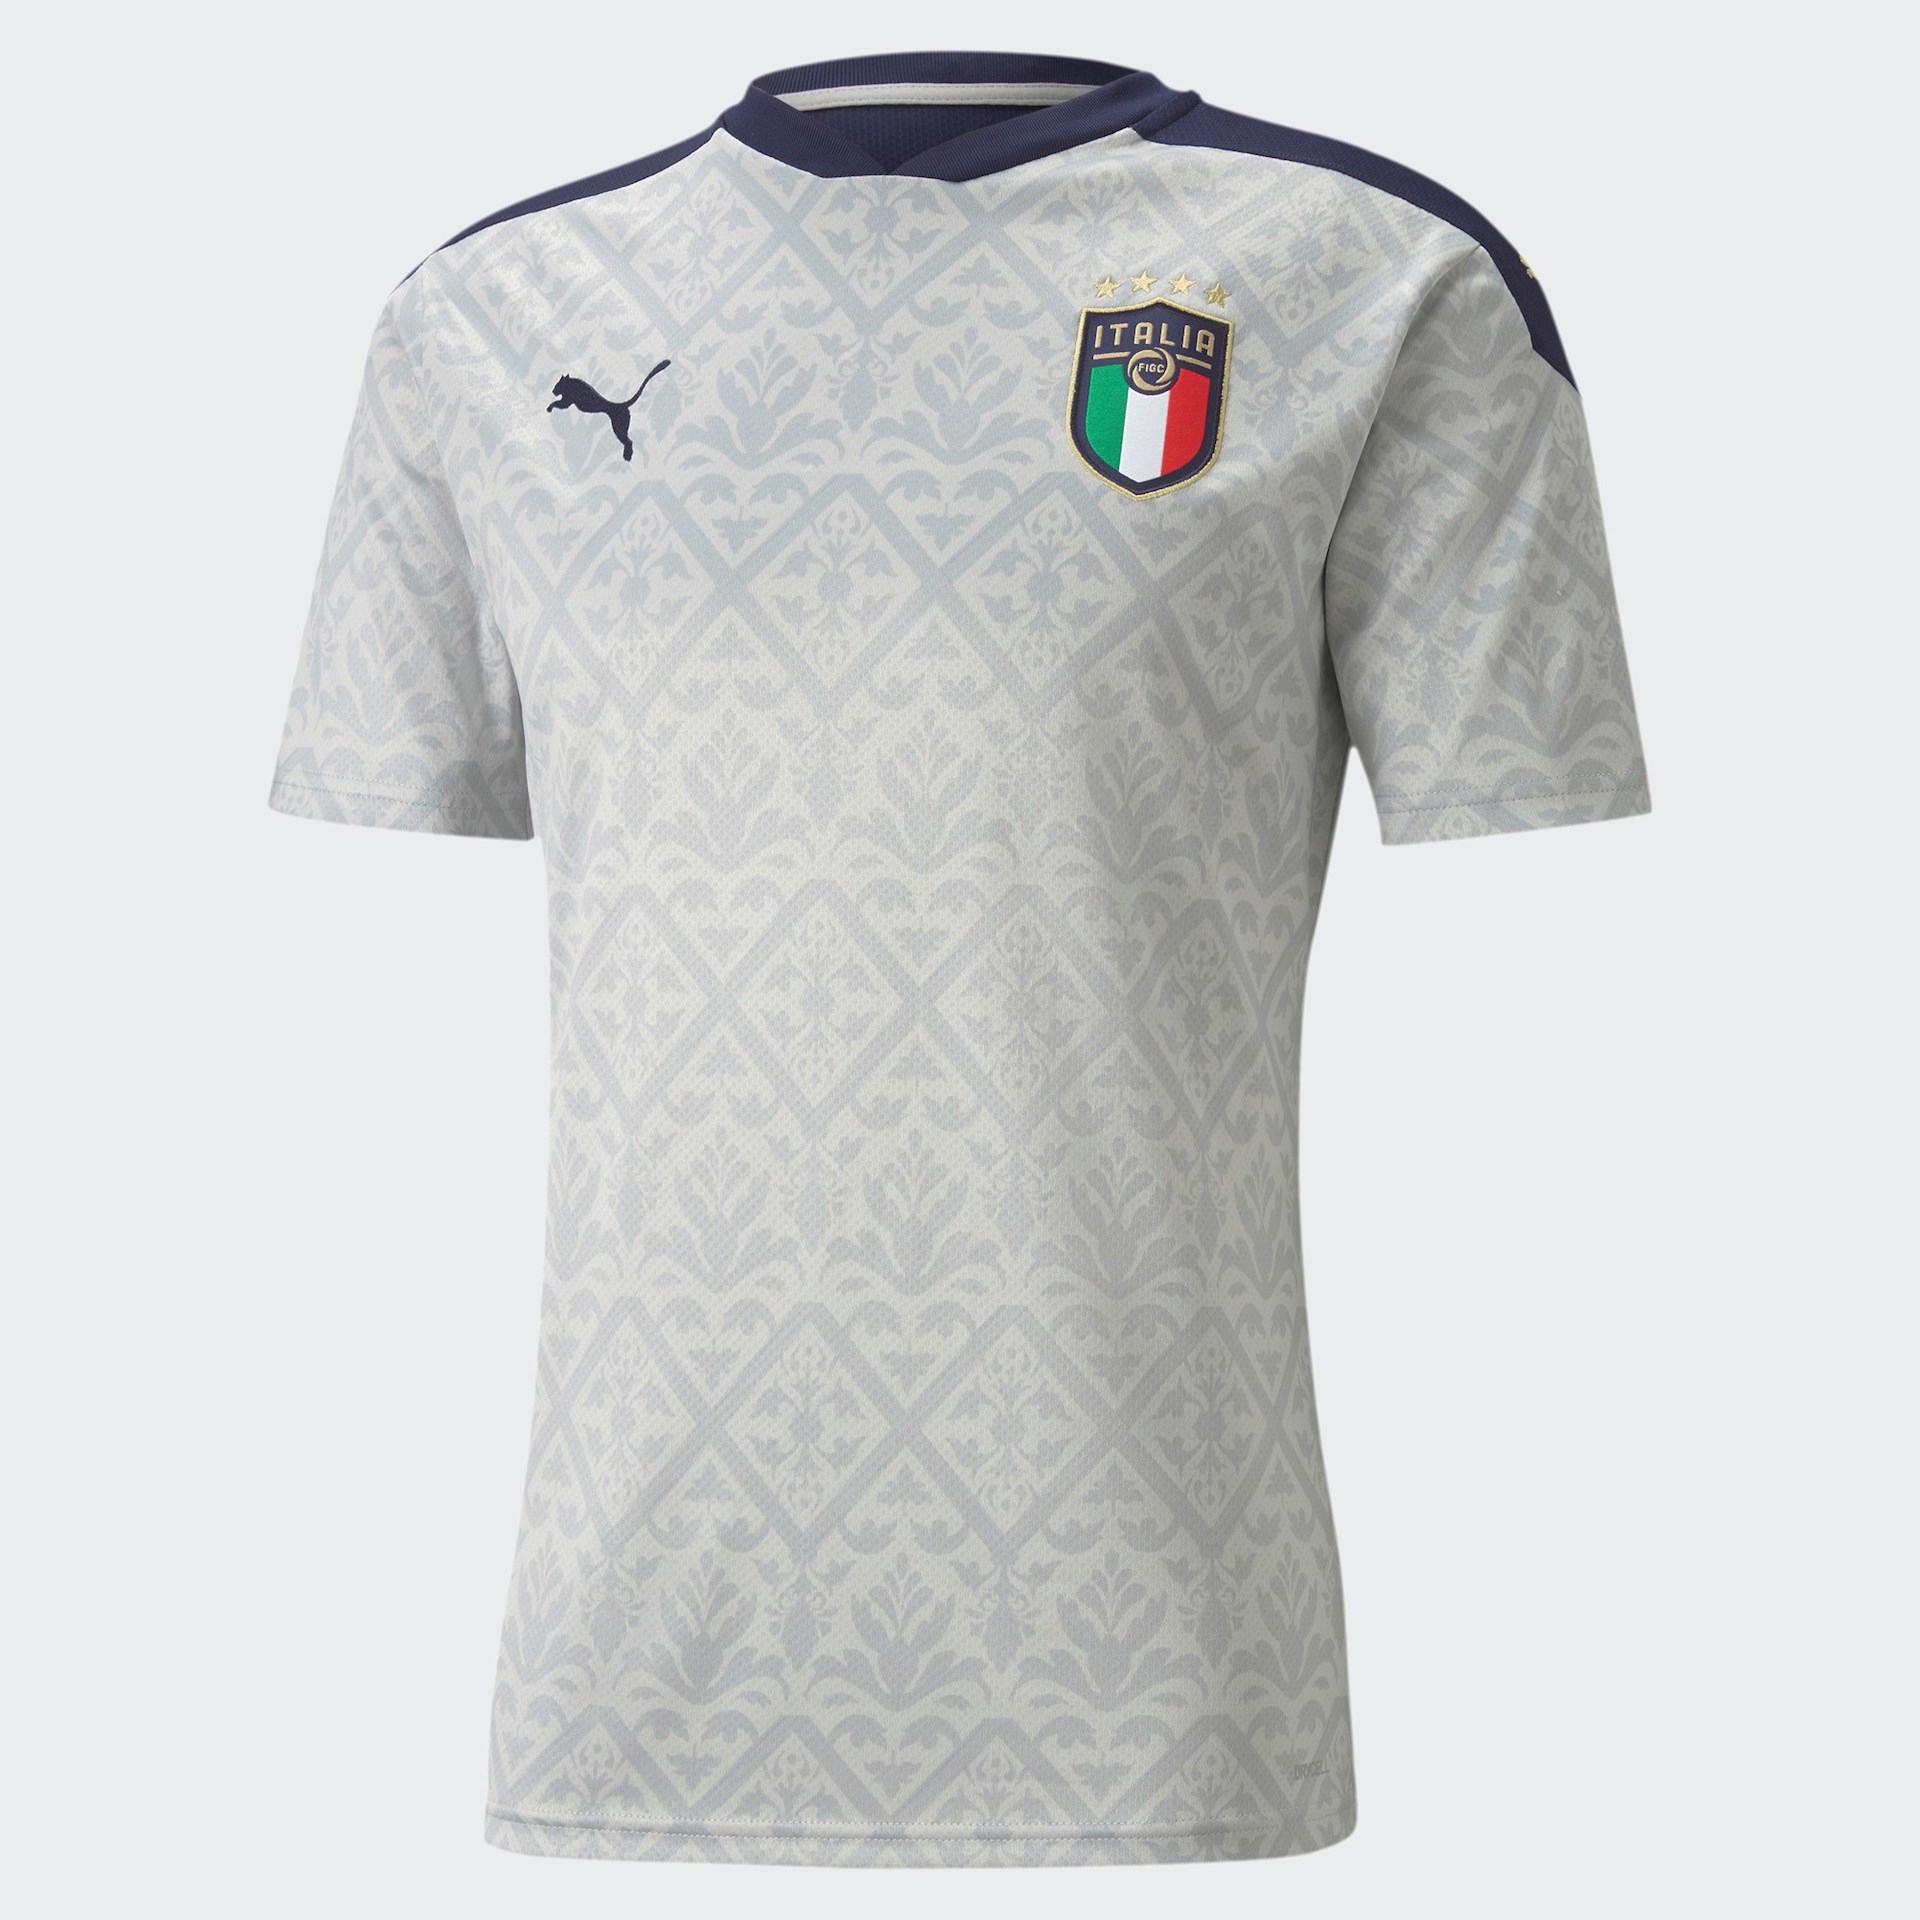 Italië keeper shirt EK 2020